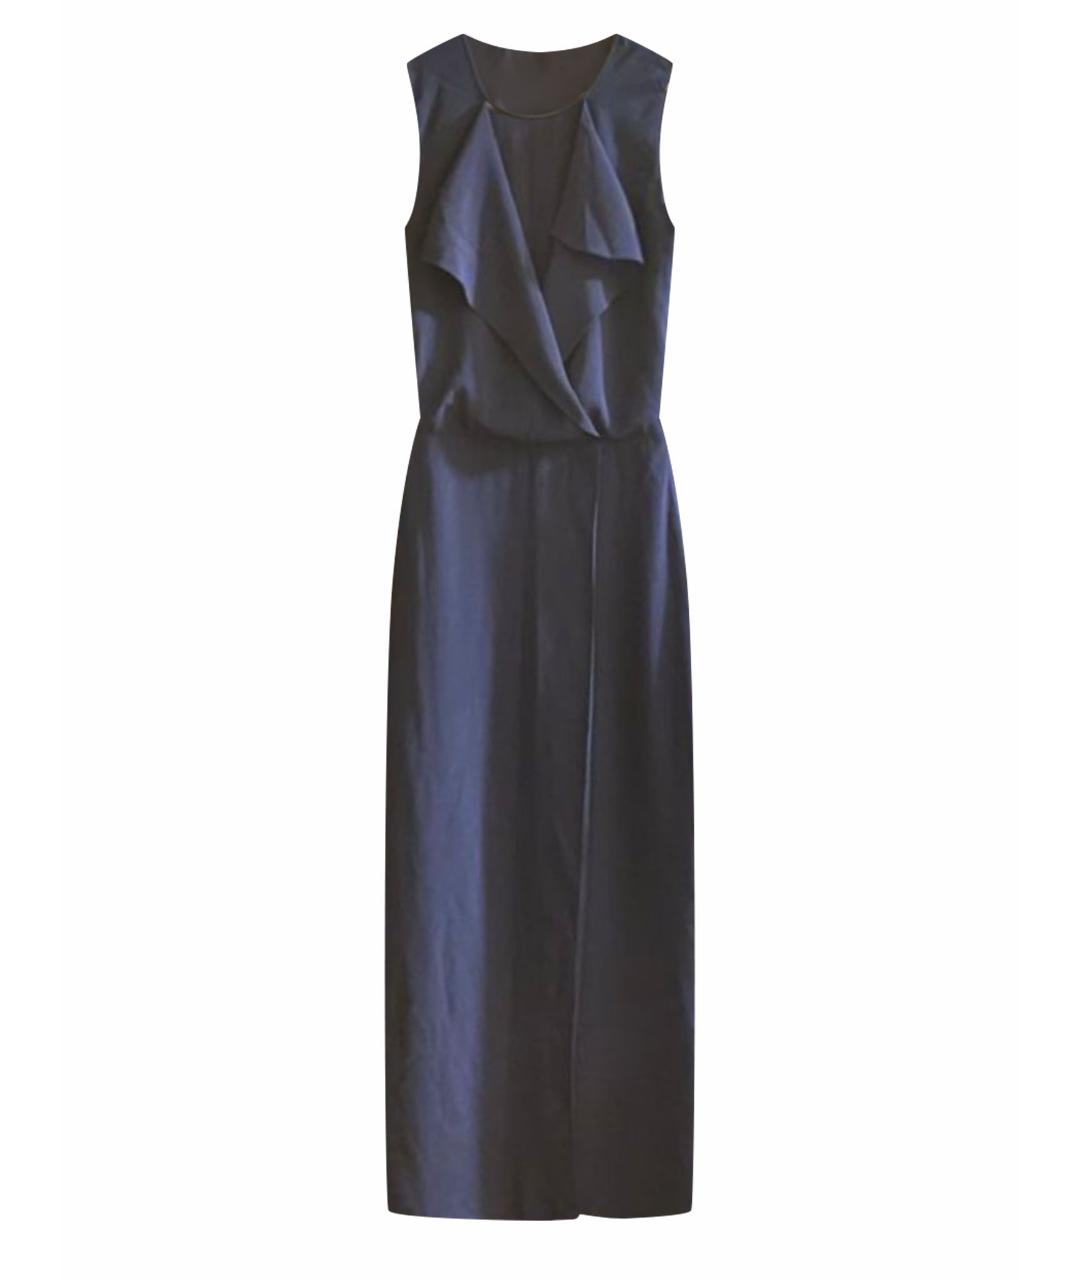 PAUL SMITH BLACK LABEL Темно-синее шелковое вечернее платье, фото 1